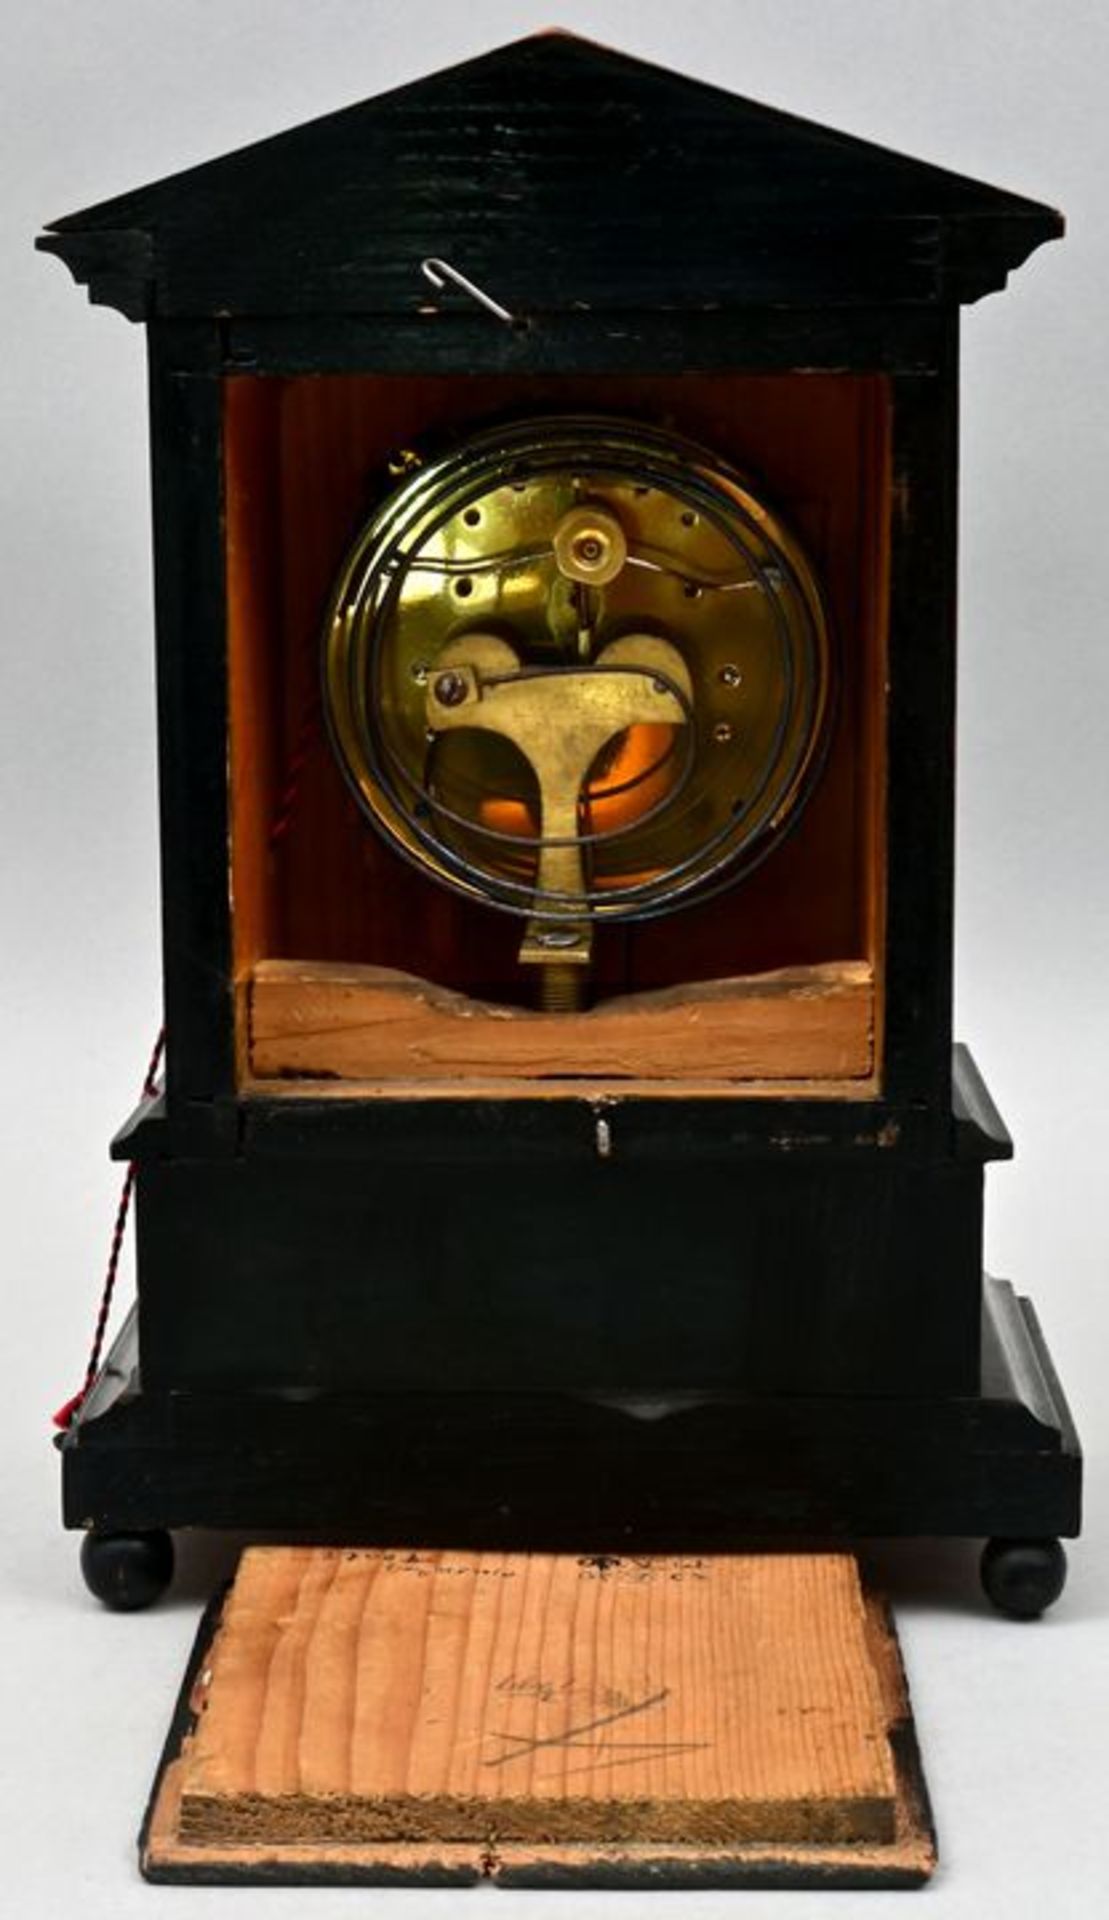 Tischuhr / Table clock - Image 2 of 3